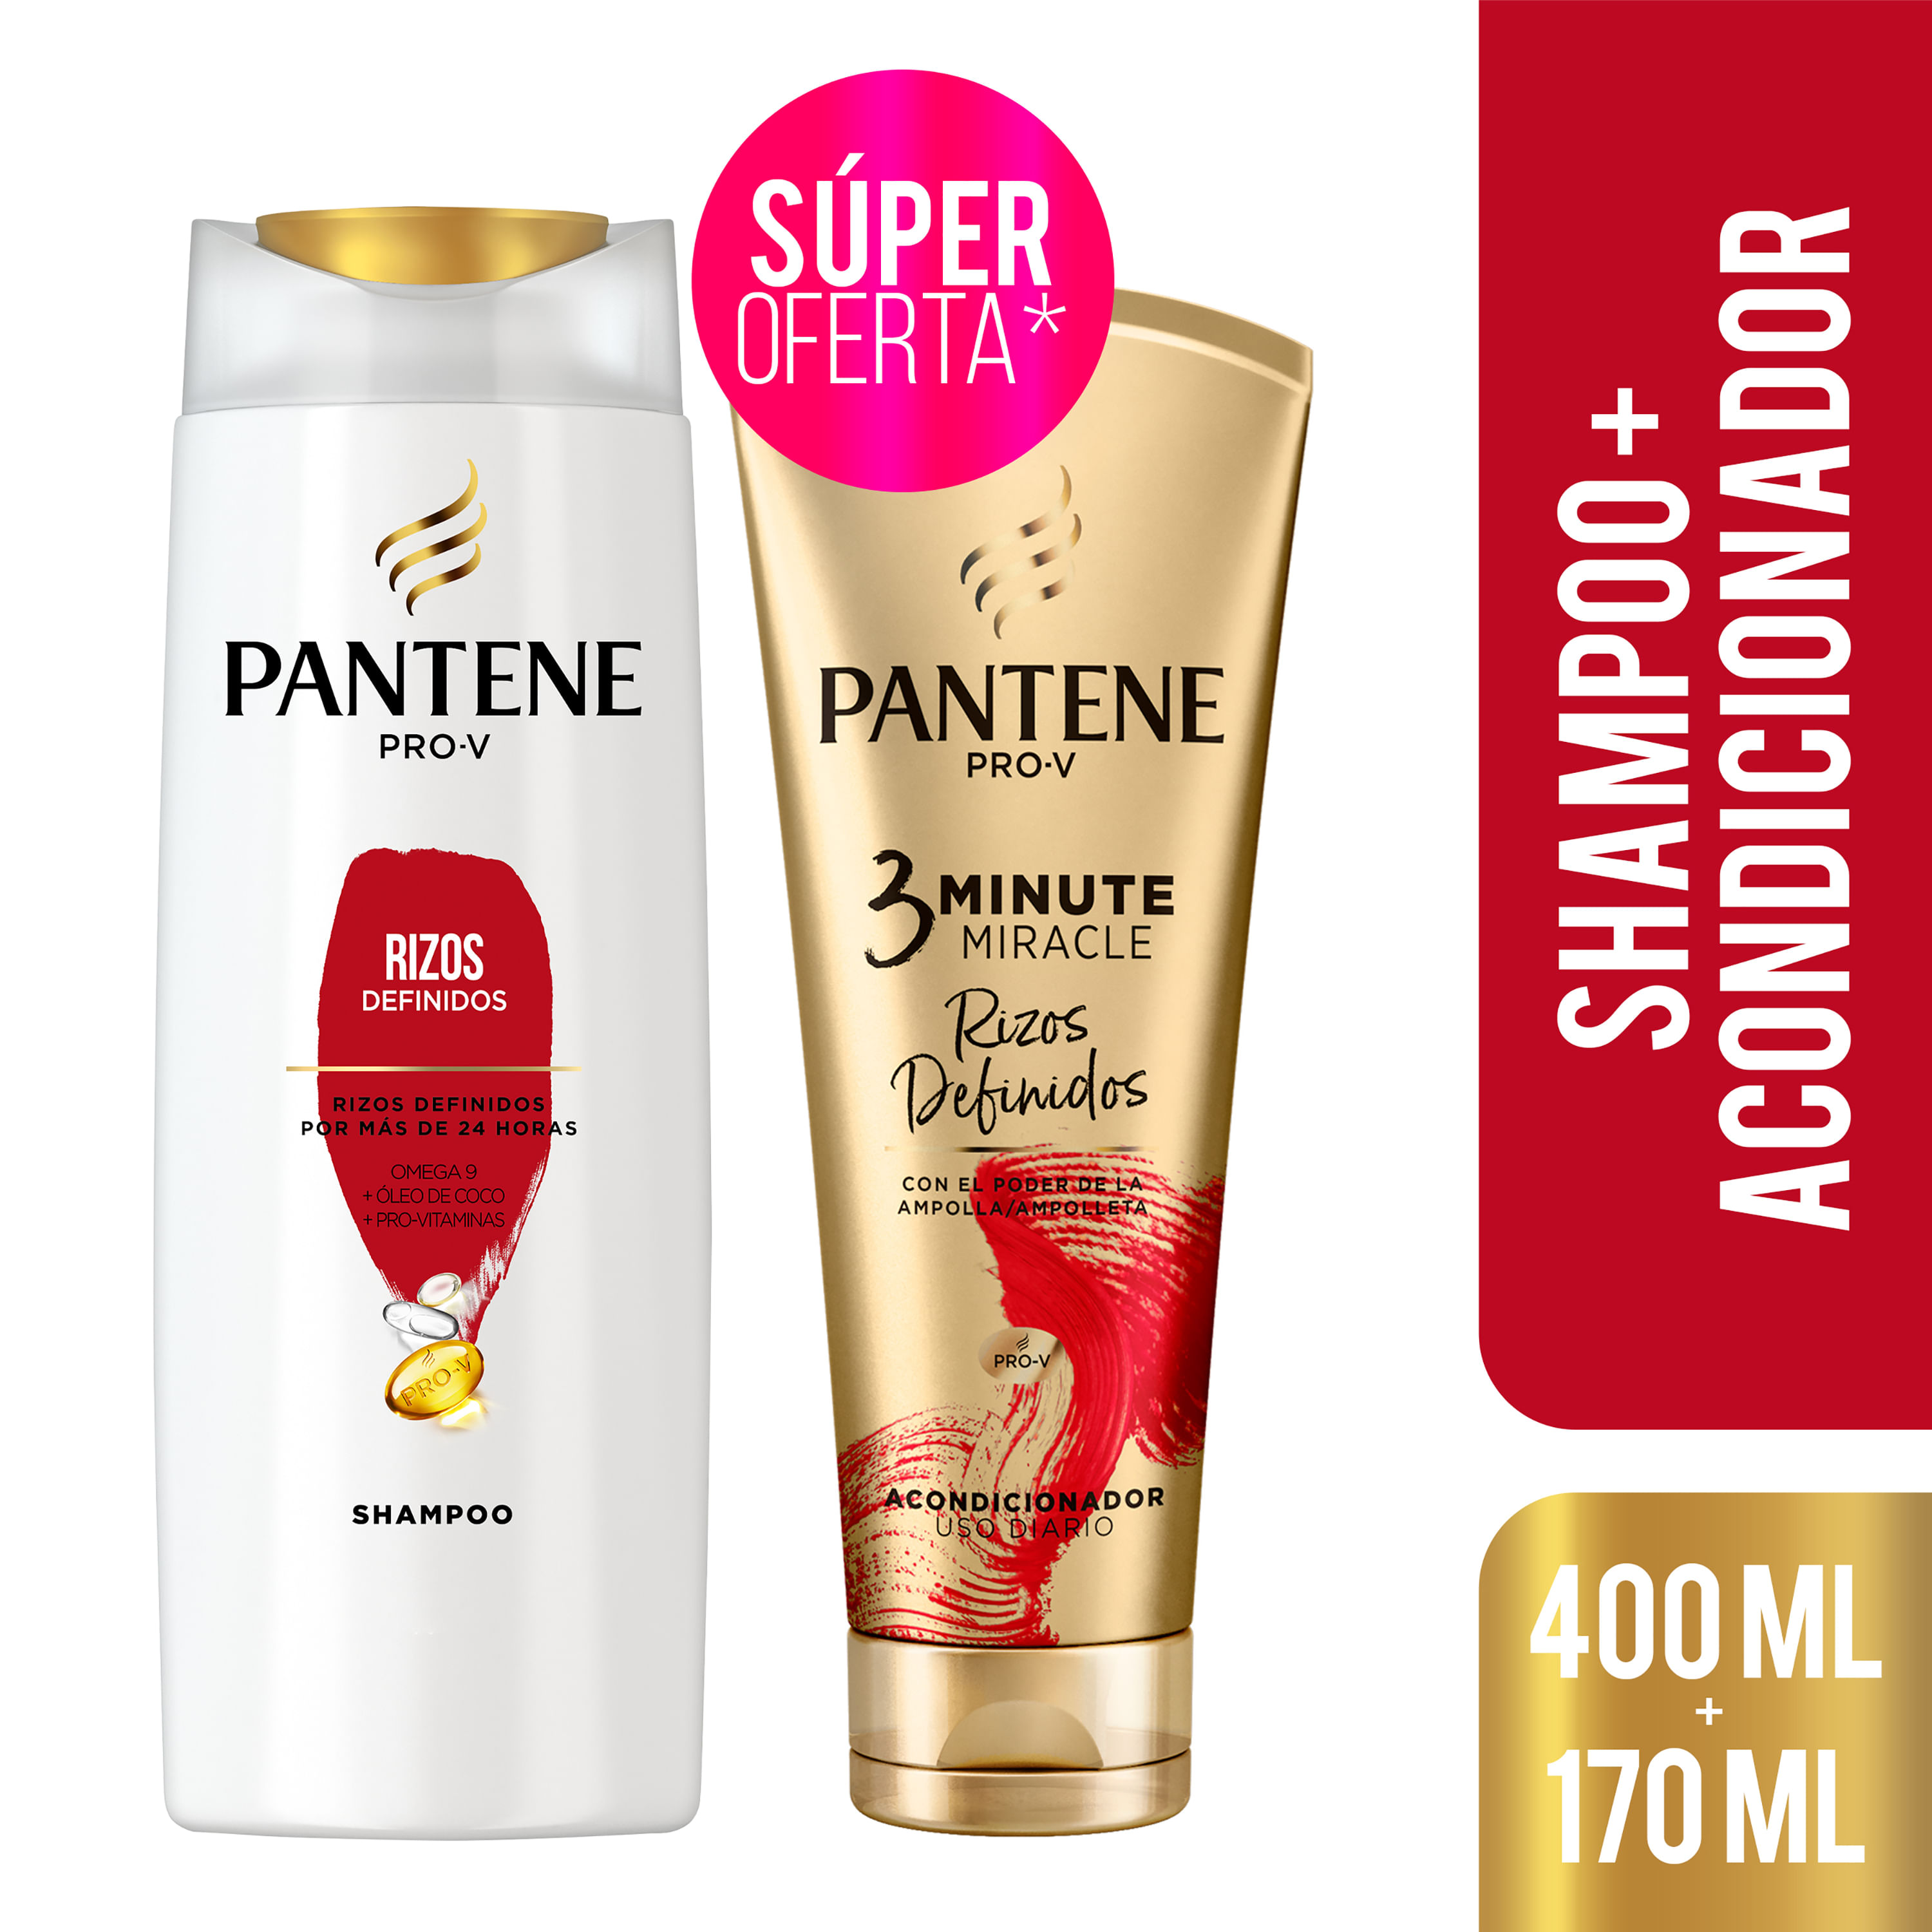 Shampoo-y-Acondicionador-Pantene-Pro-V-Rizos-Definidos-3-Minute-Miracle-Promo-Pack-400-ml-170-ml-1-11199